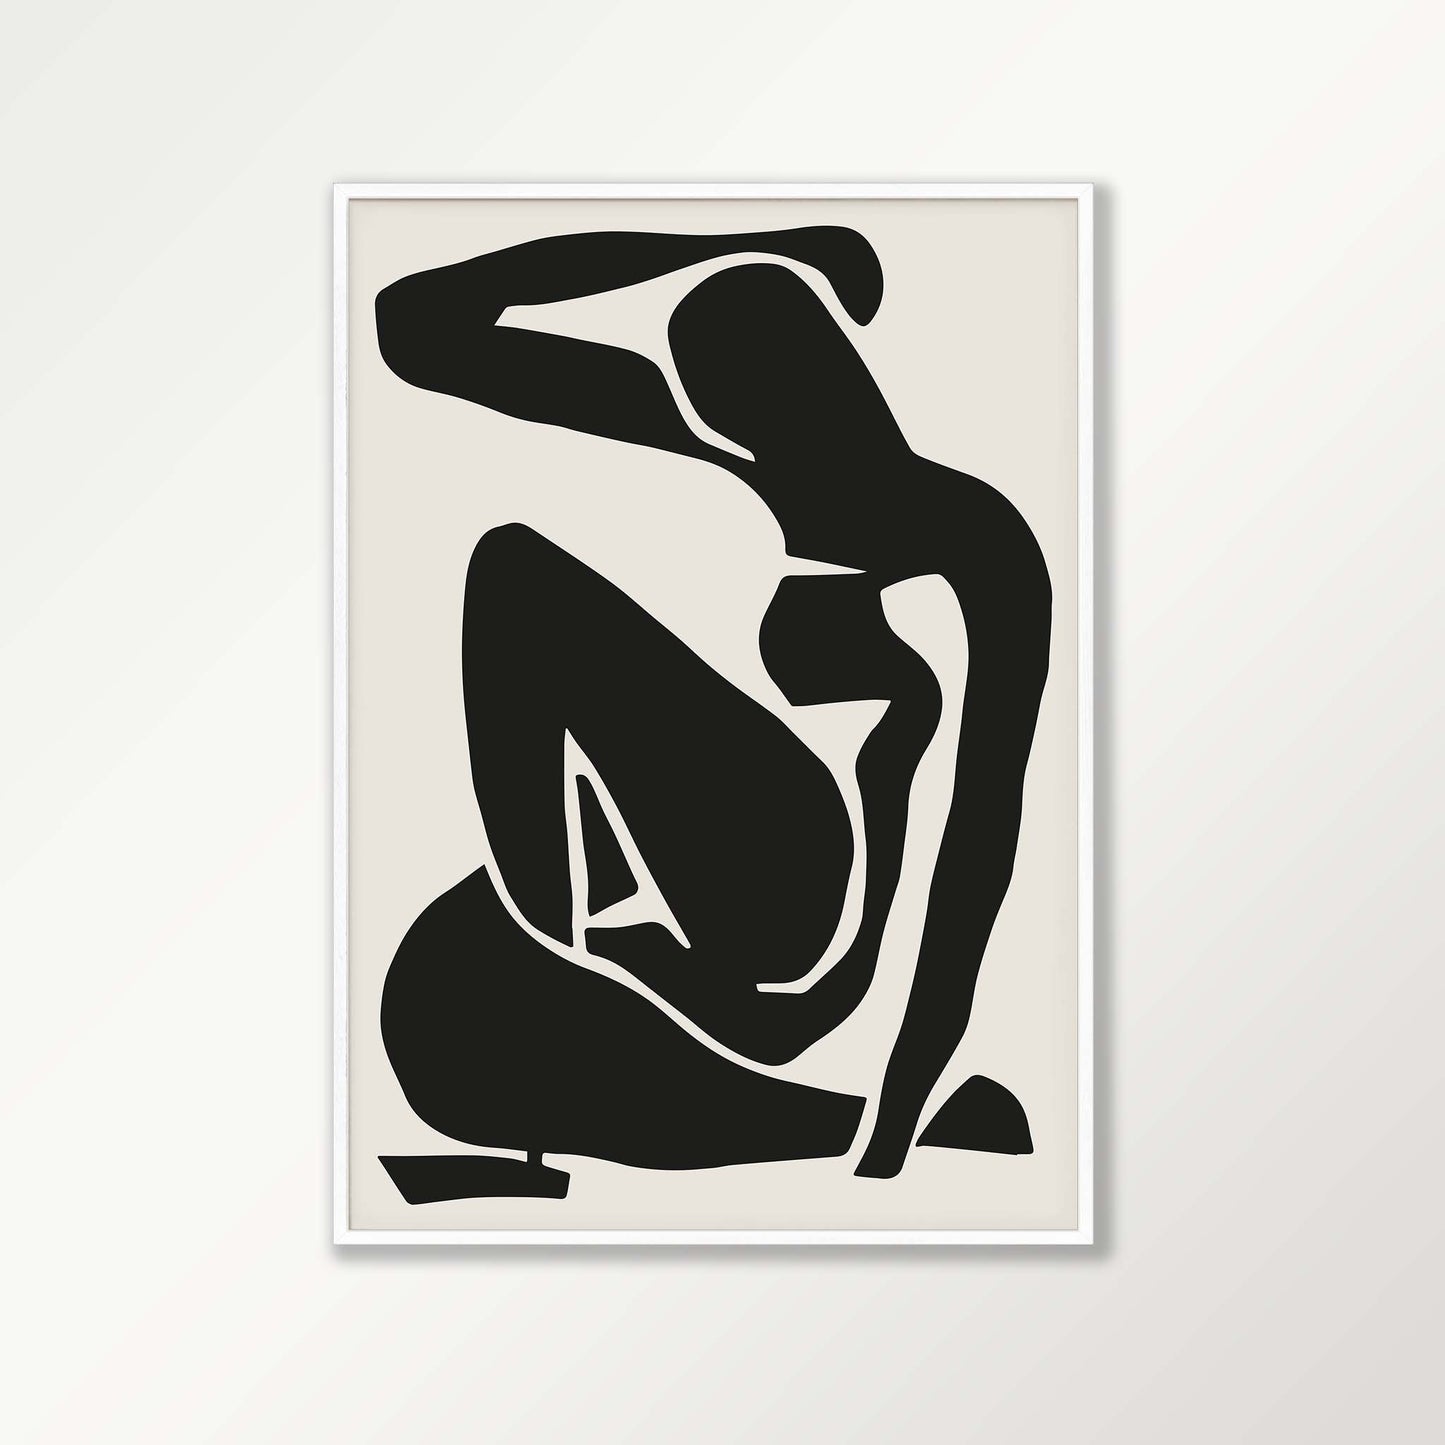 Noir Cut Out by Henri Matisse